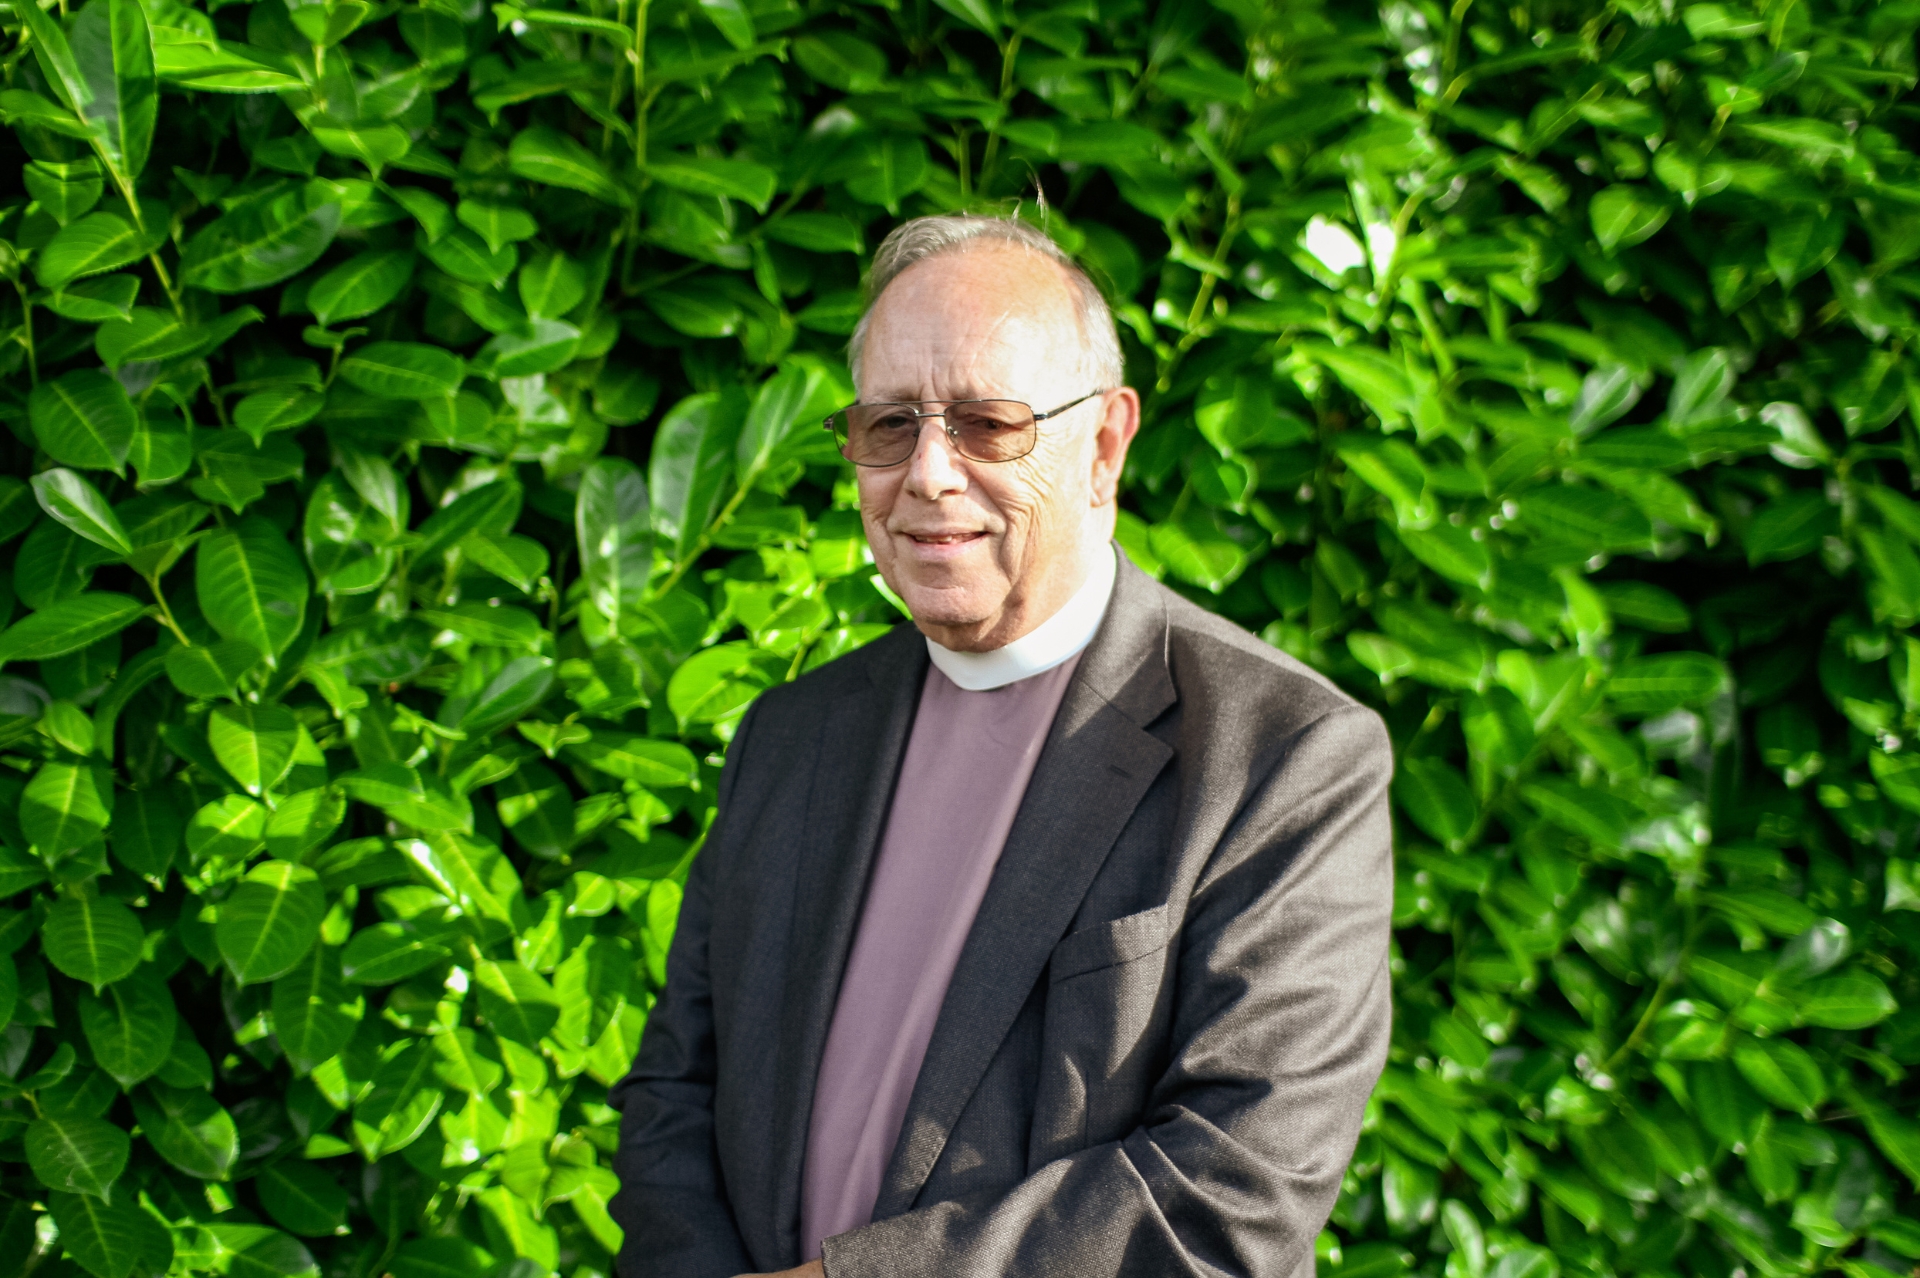 Smiling profile of the Venerable Stuart Beake wearing a purple clerical shirt and grey jacket